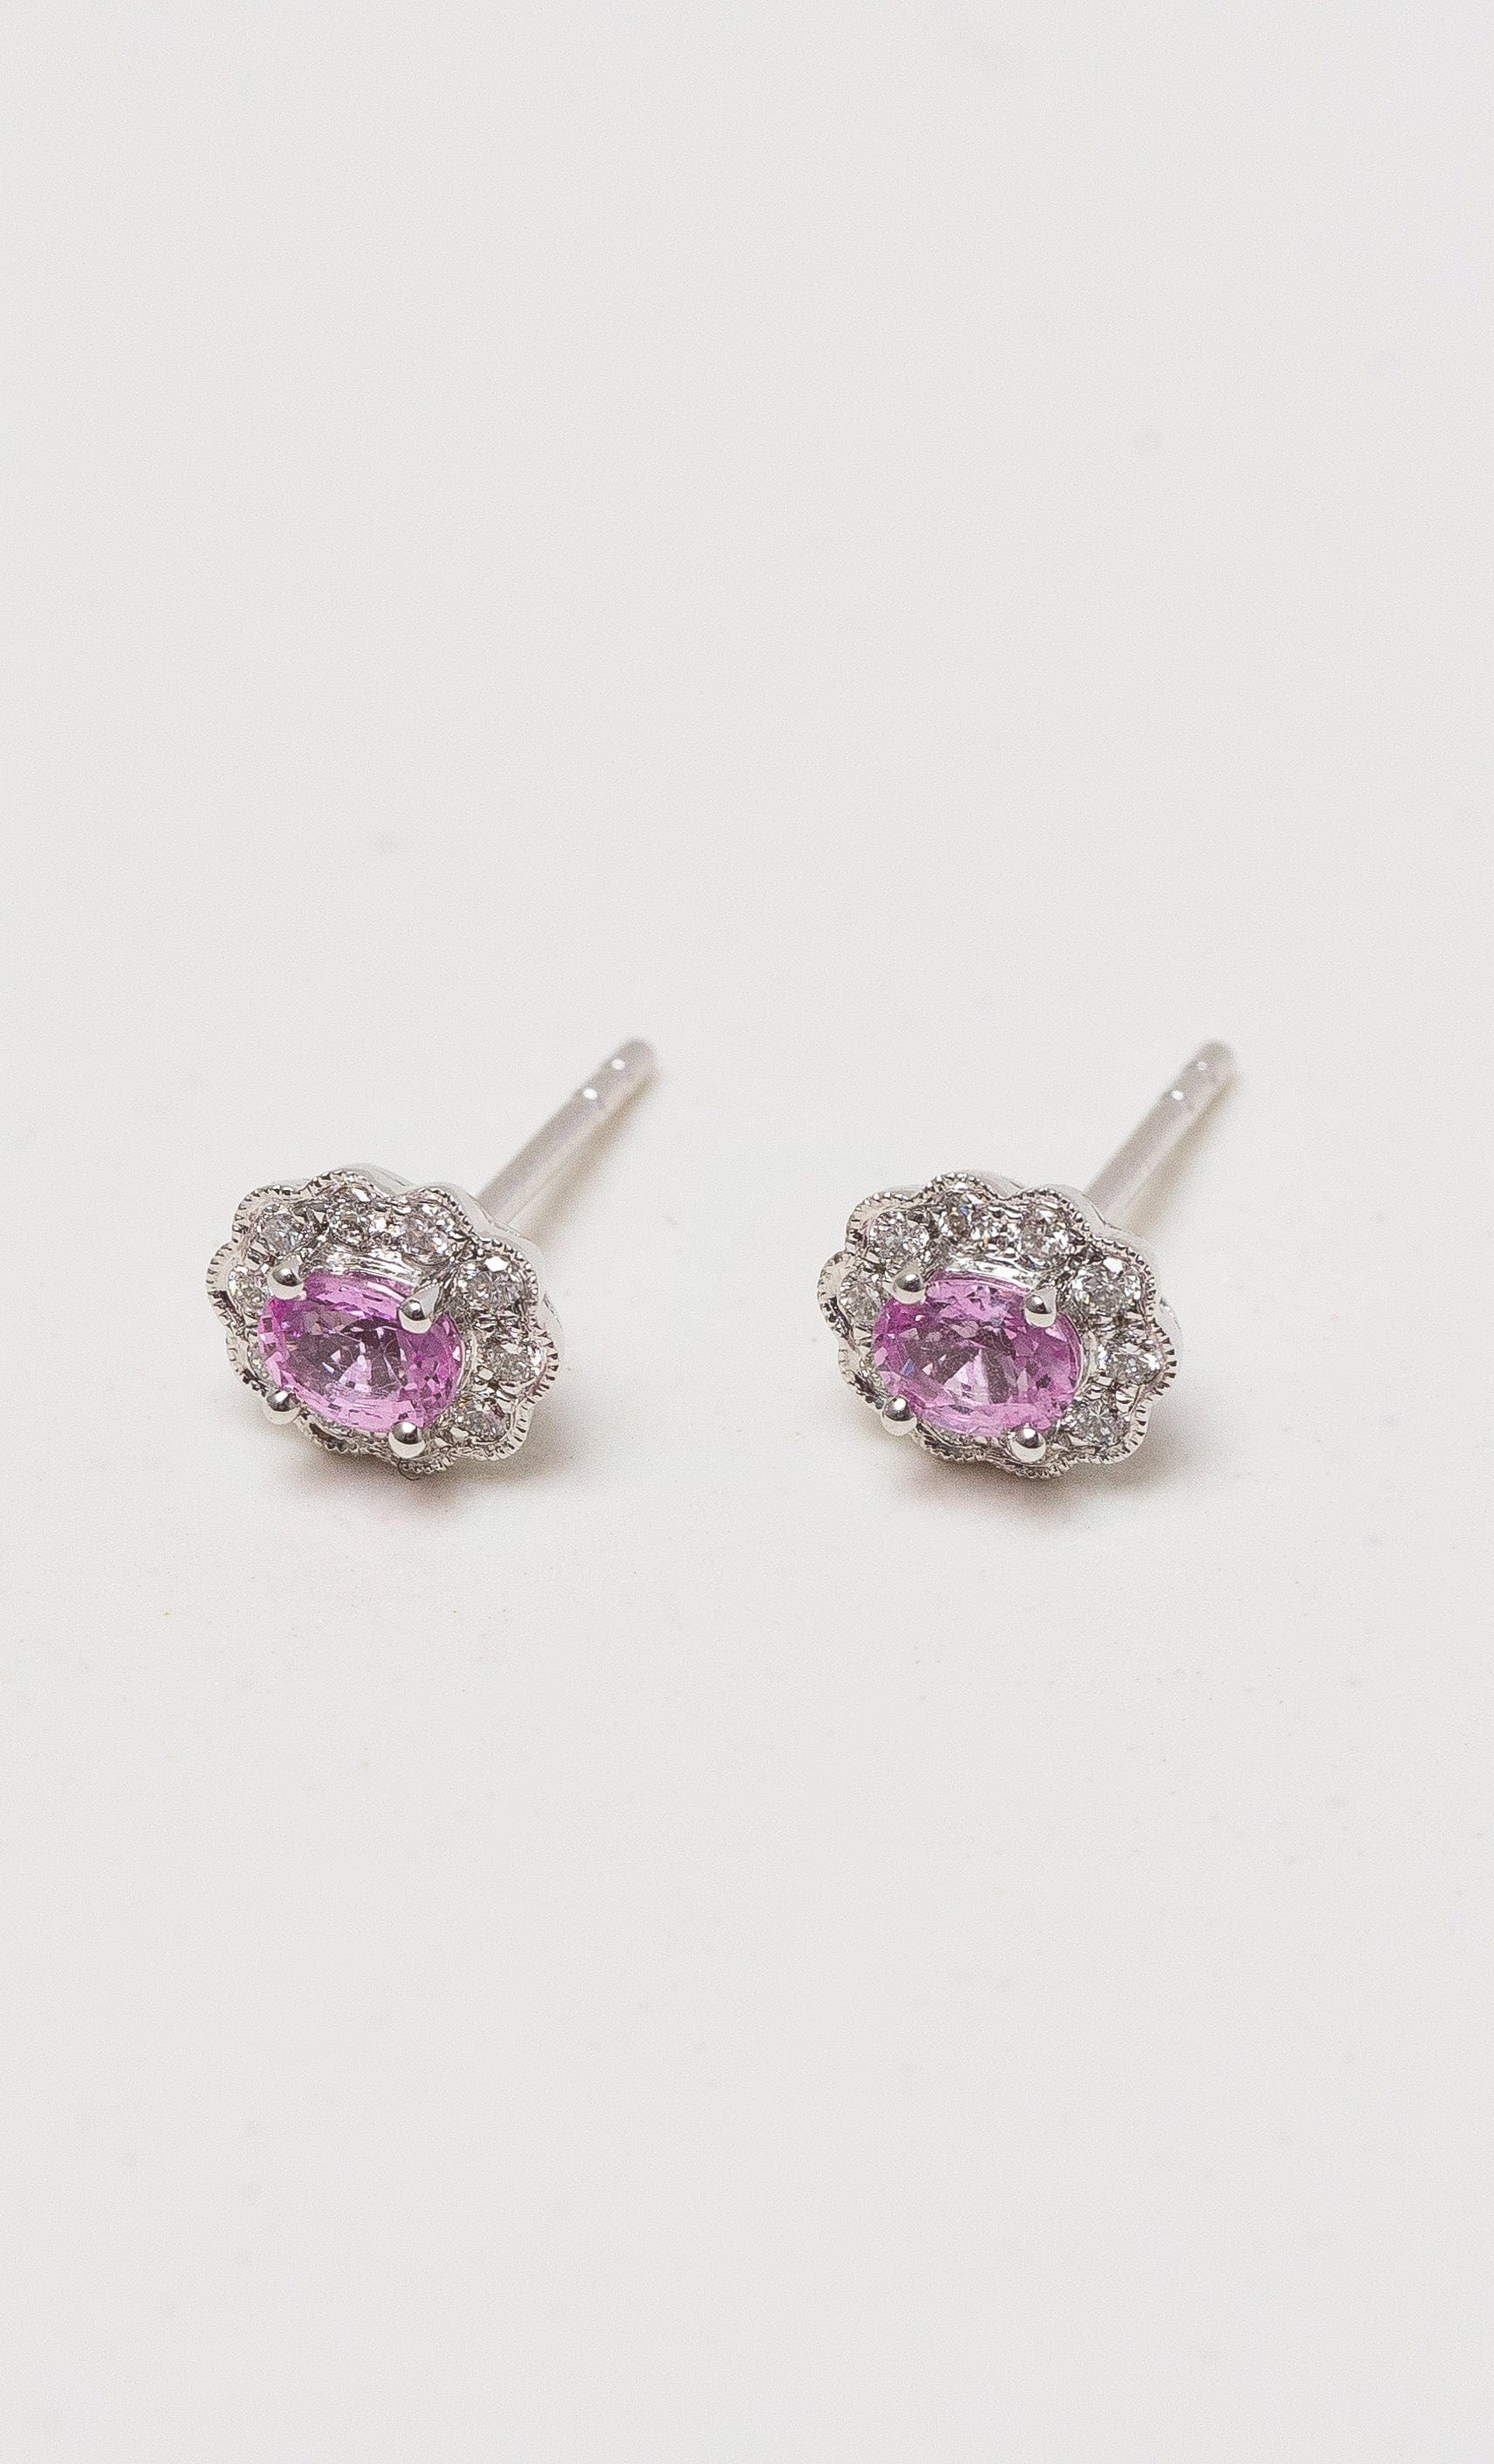 Hogans Family Jewellers 18K WG Pink Sapphire Cluster Stud Earrings